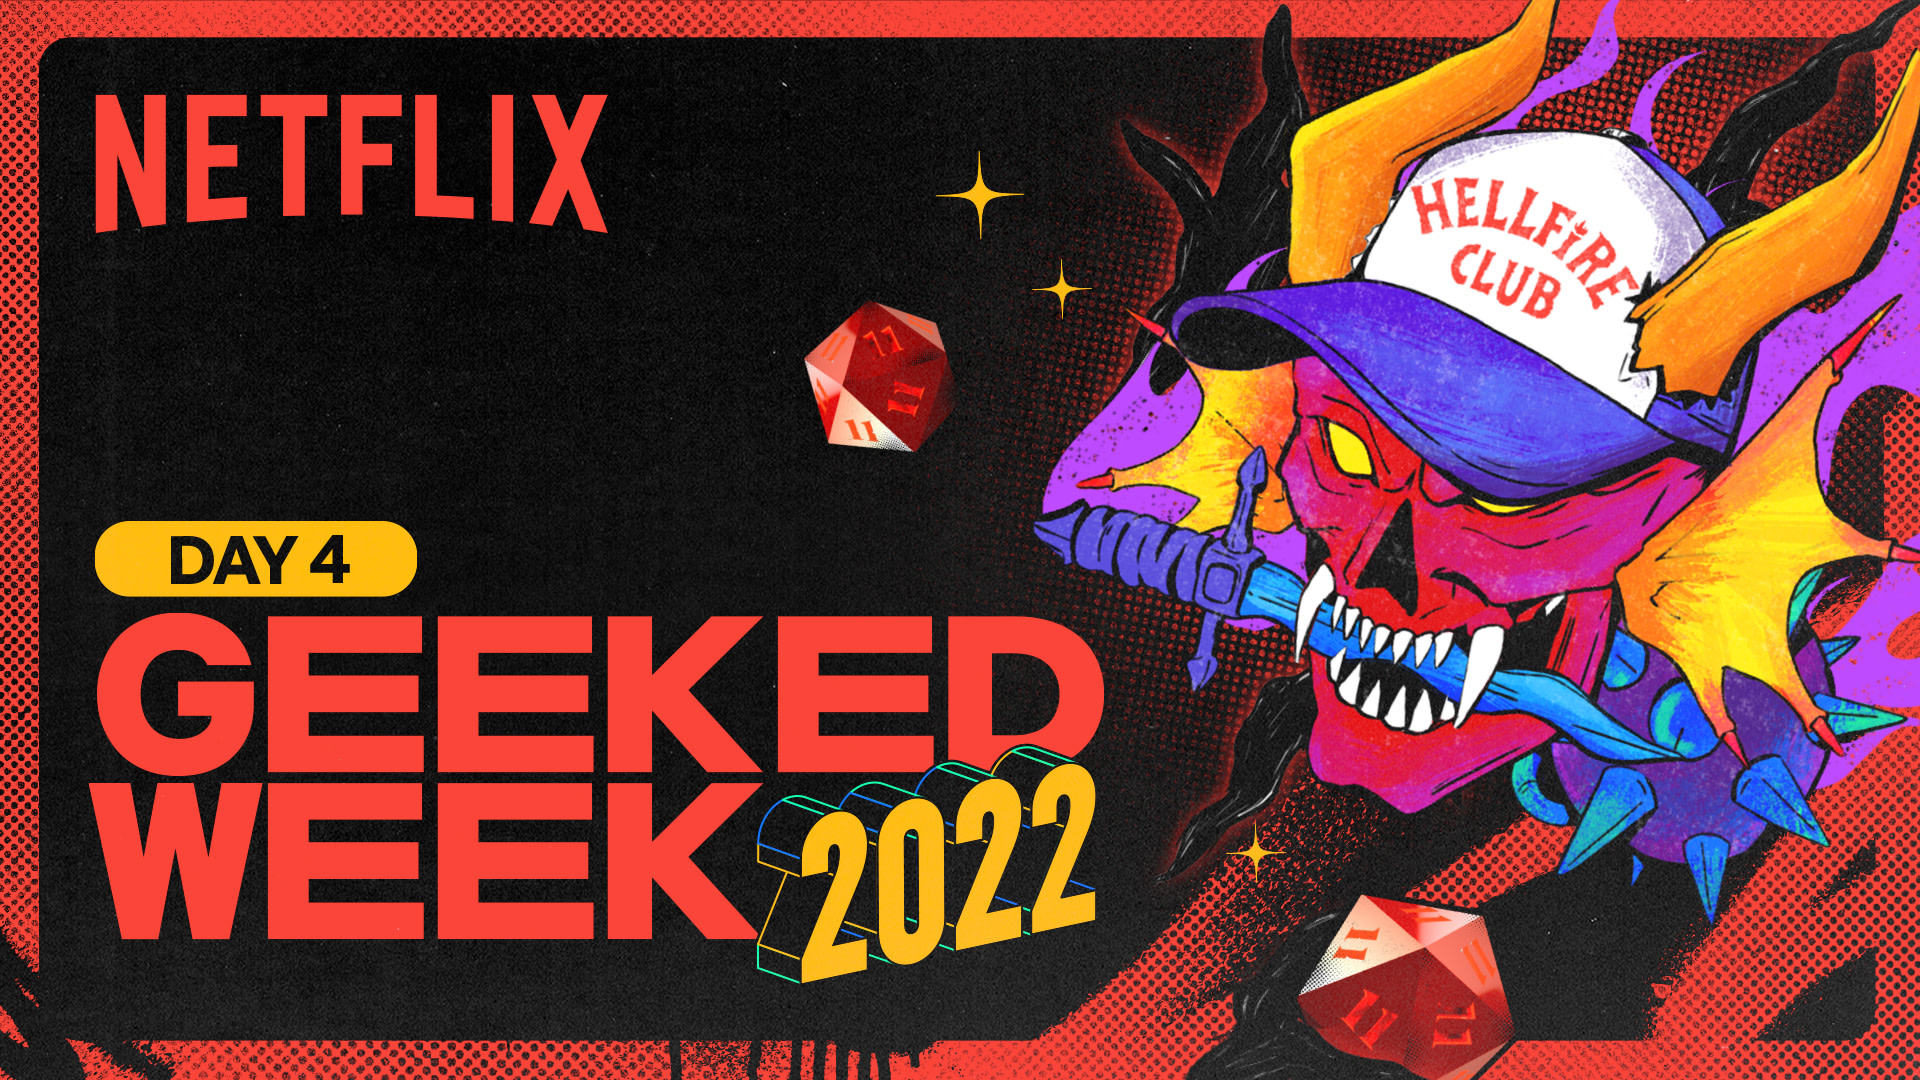 Geeked Week 2022ダイジェスト: 「ストレンジャー・シングス 未知の世界」特集デーのスクープを一挙公開